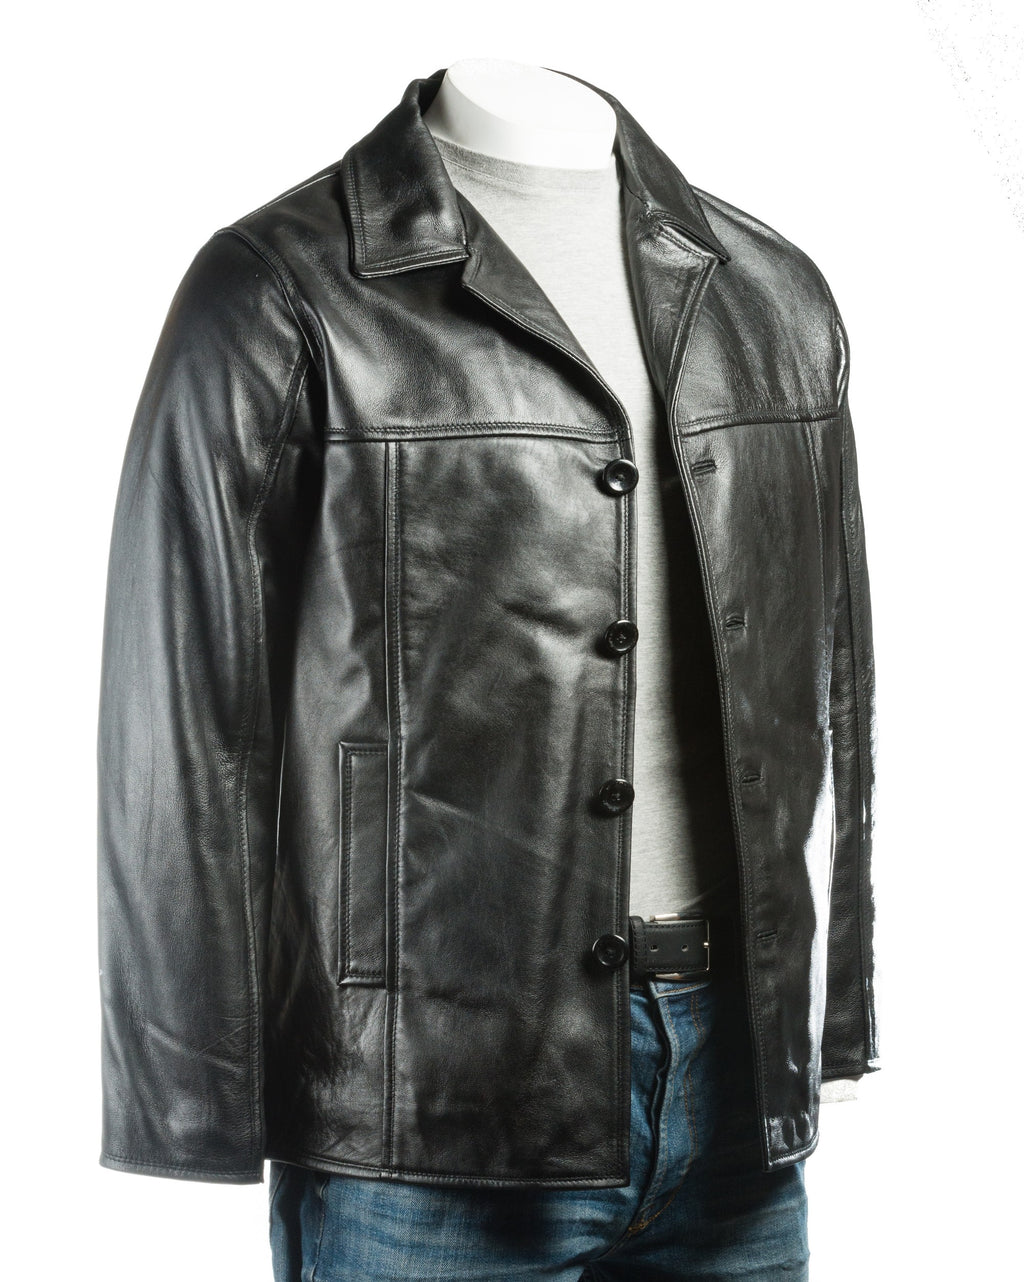 Men's Black Reefer Style Leather Jacket: Giovanni